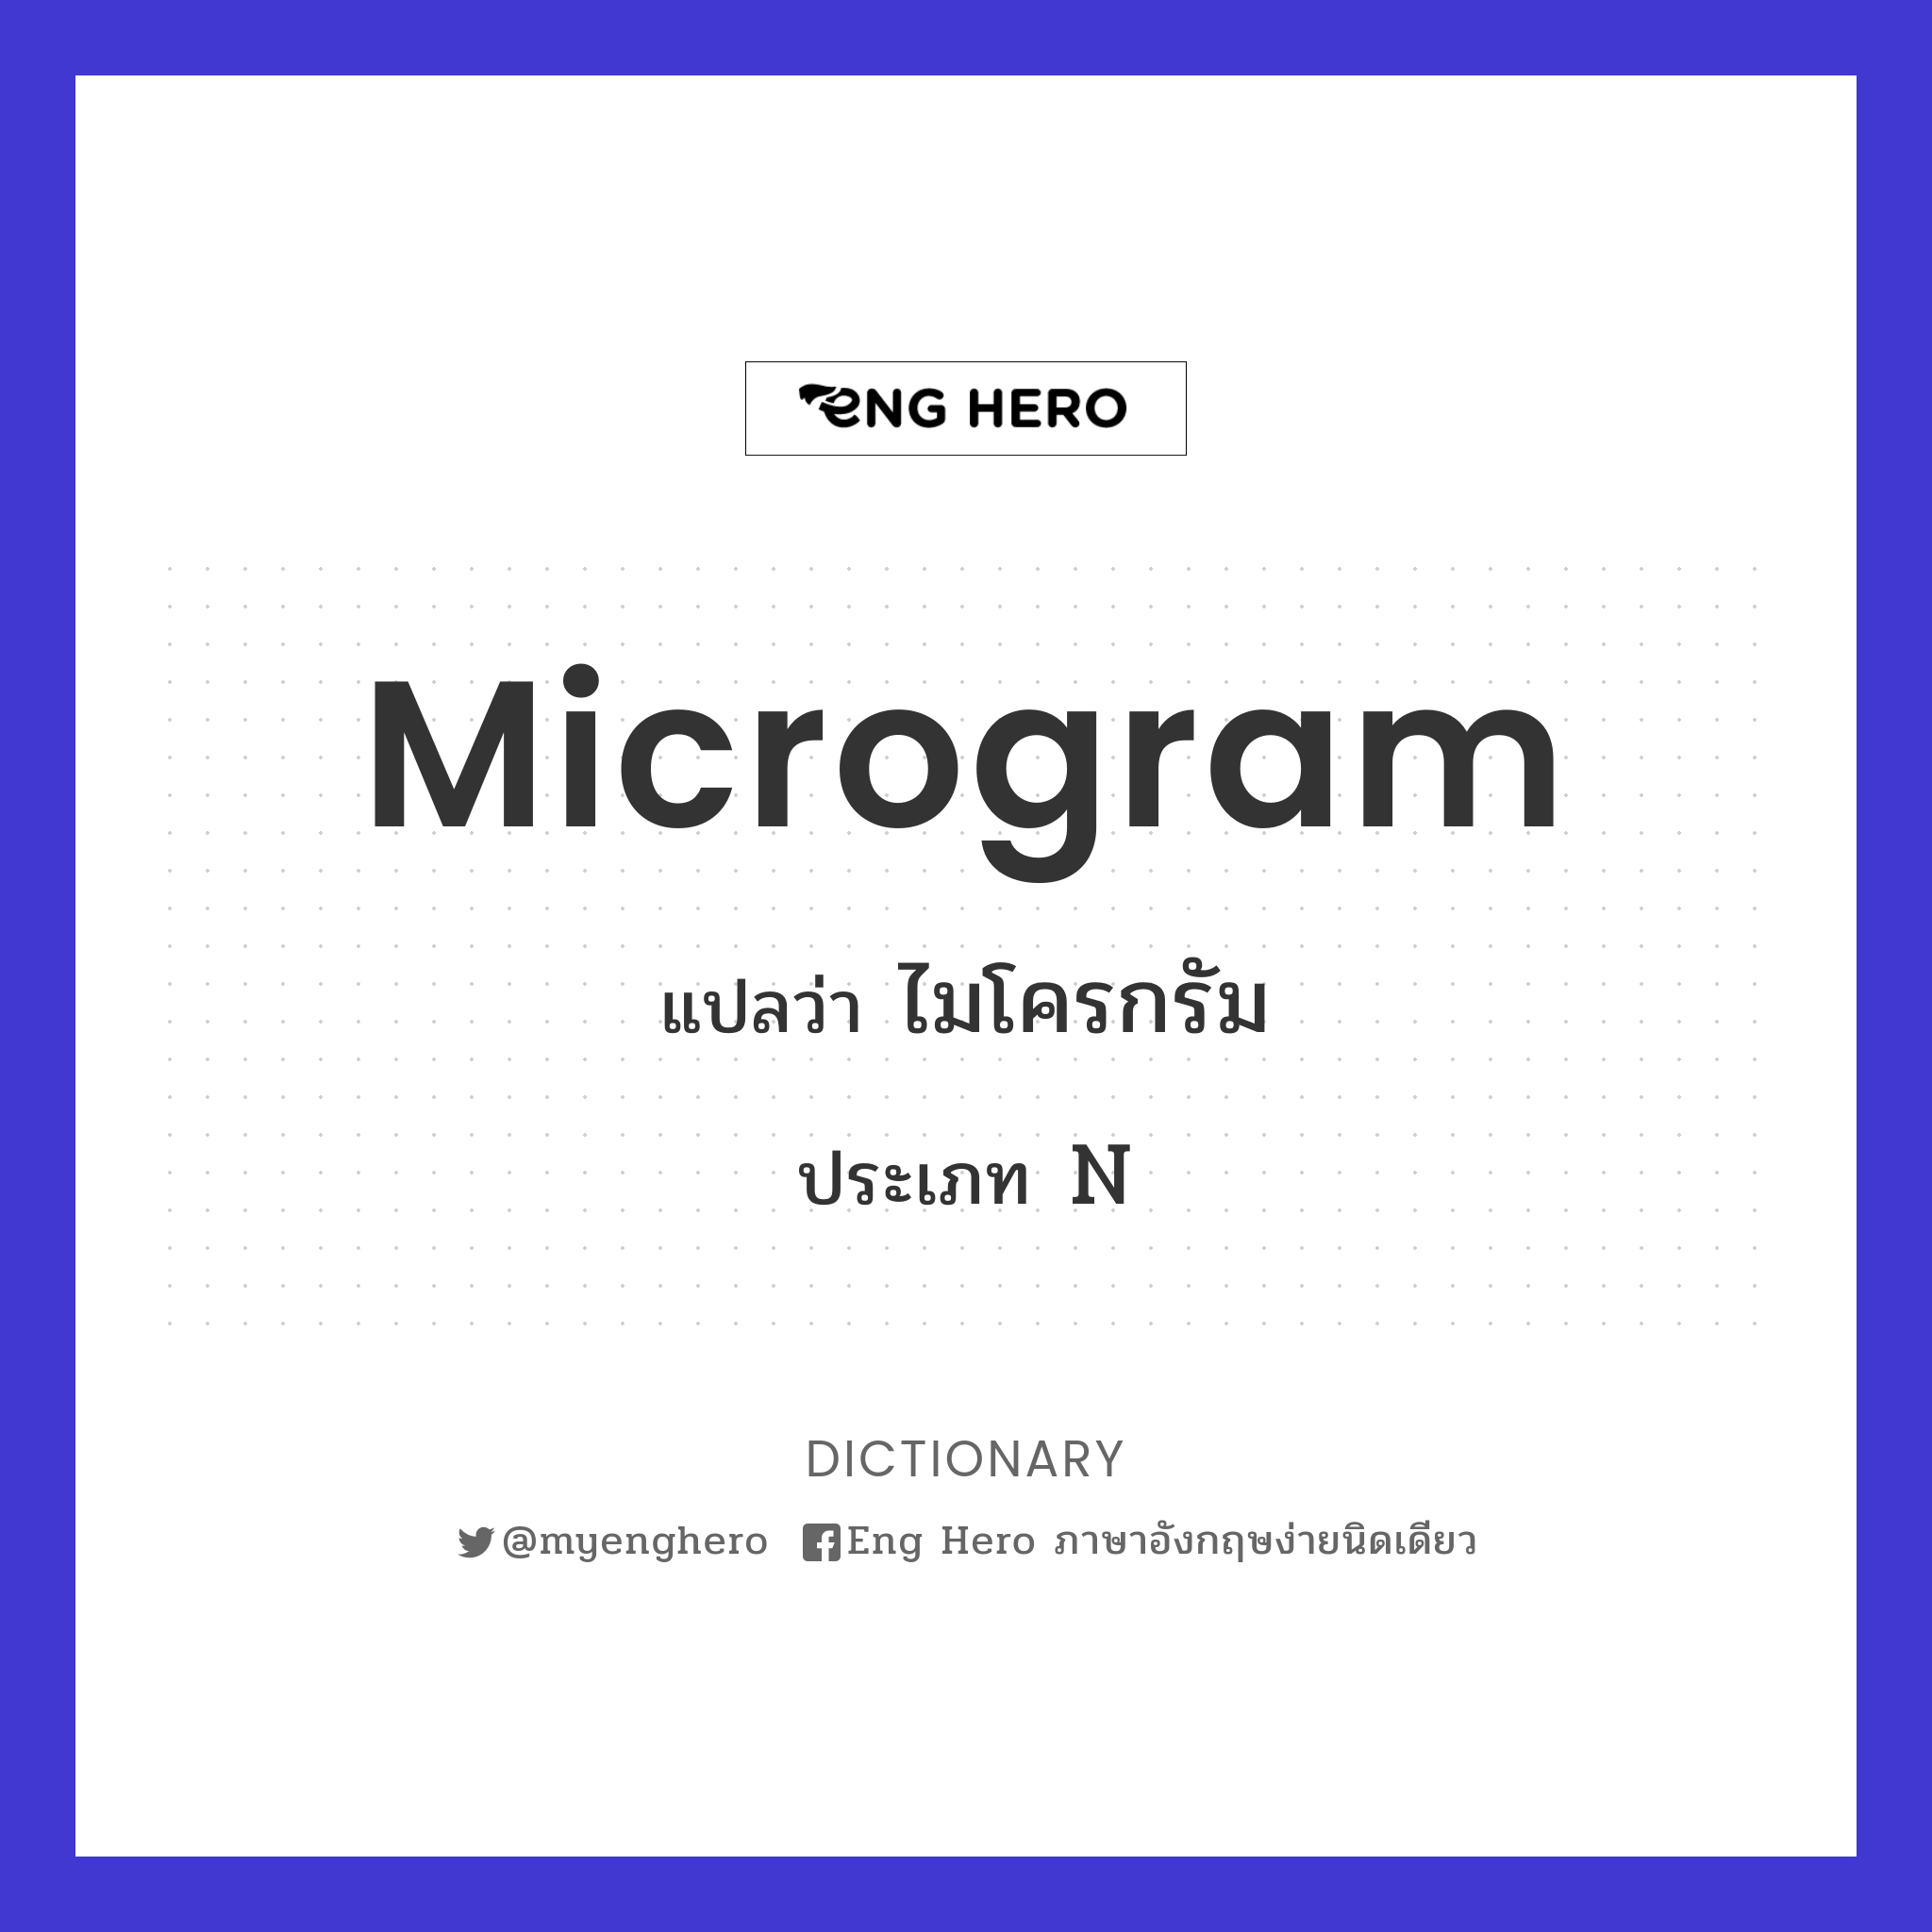 microgram